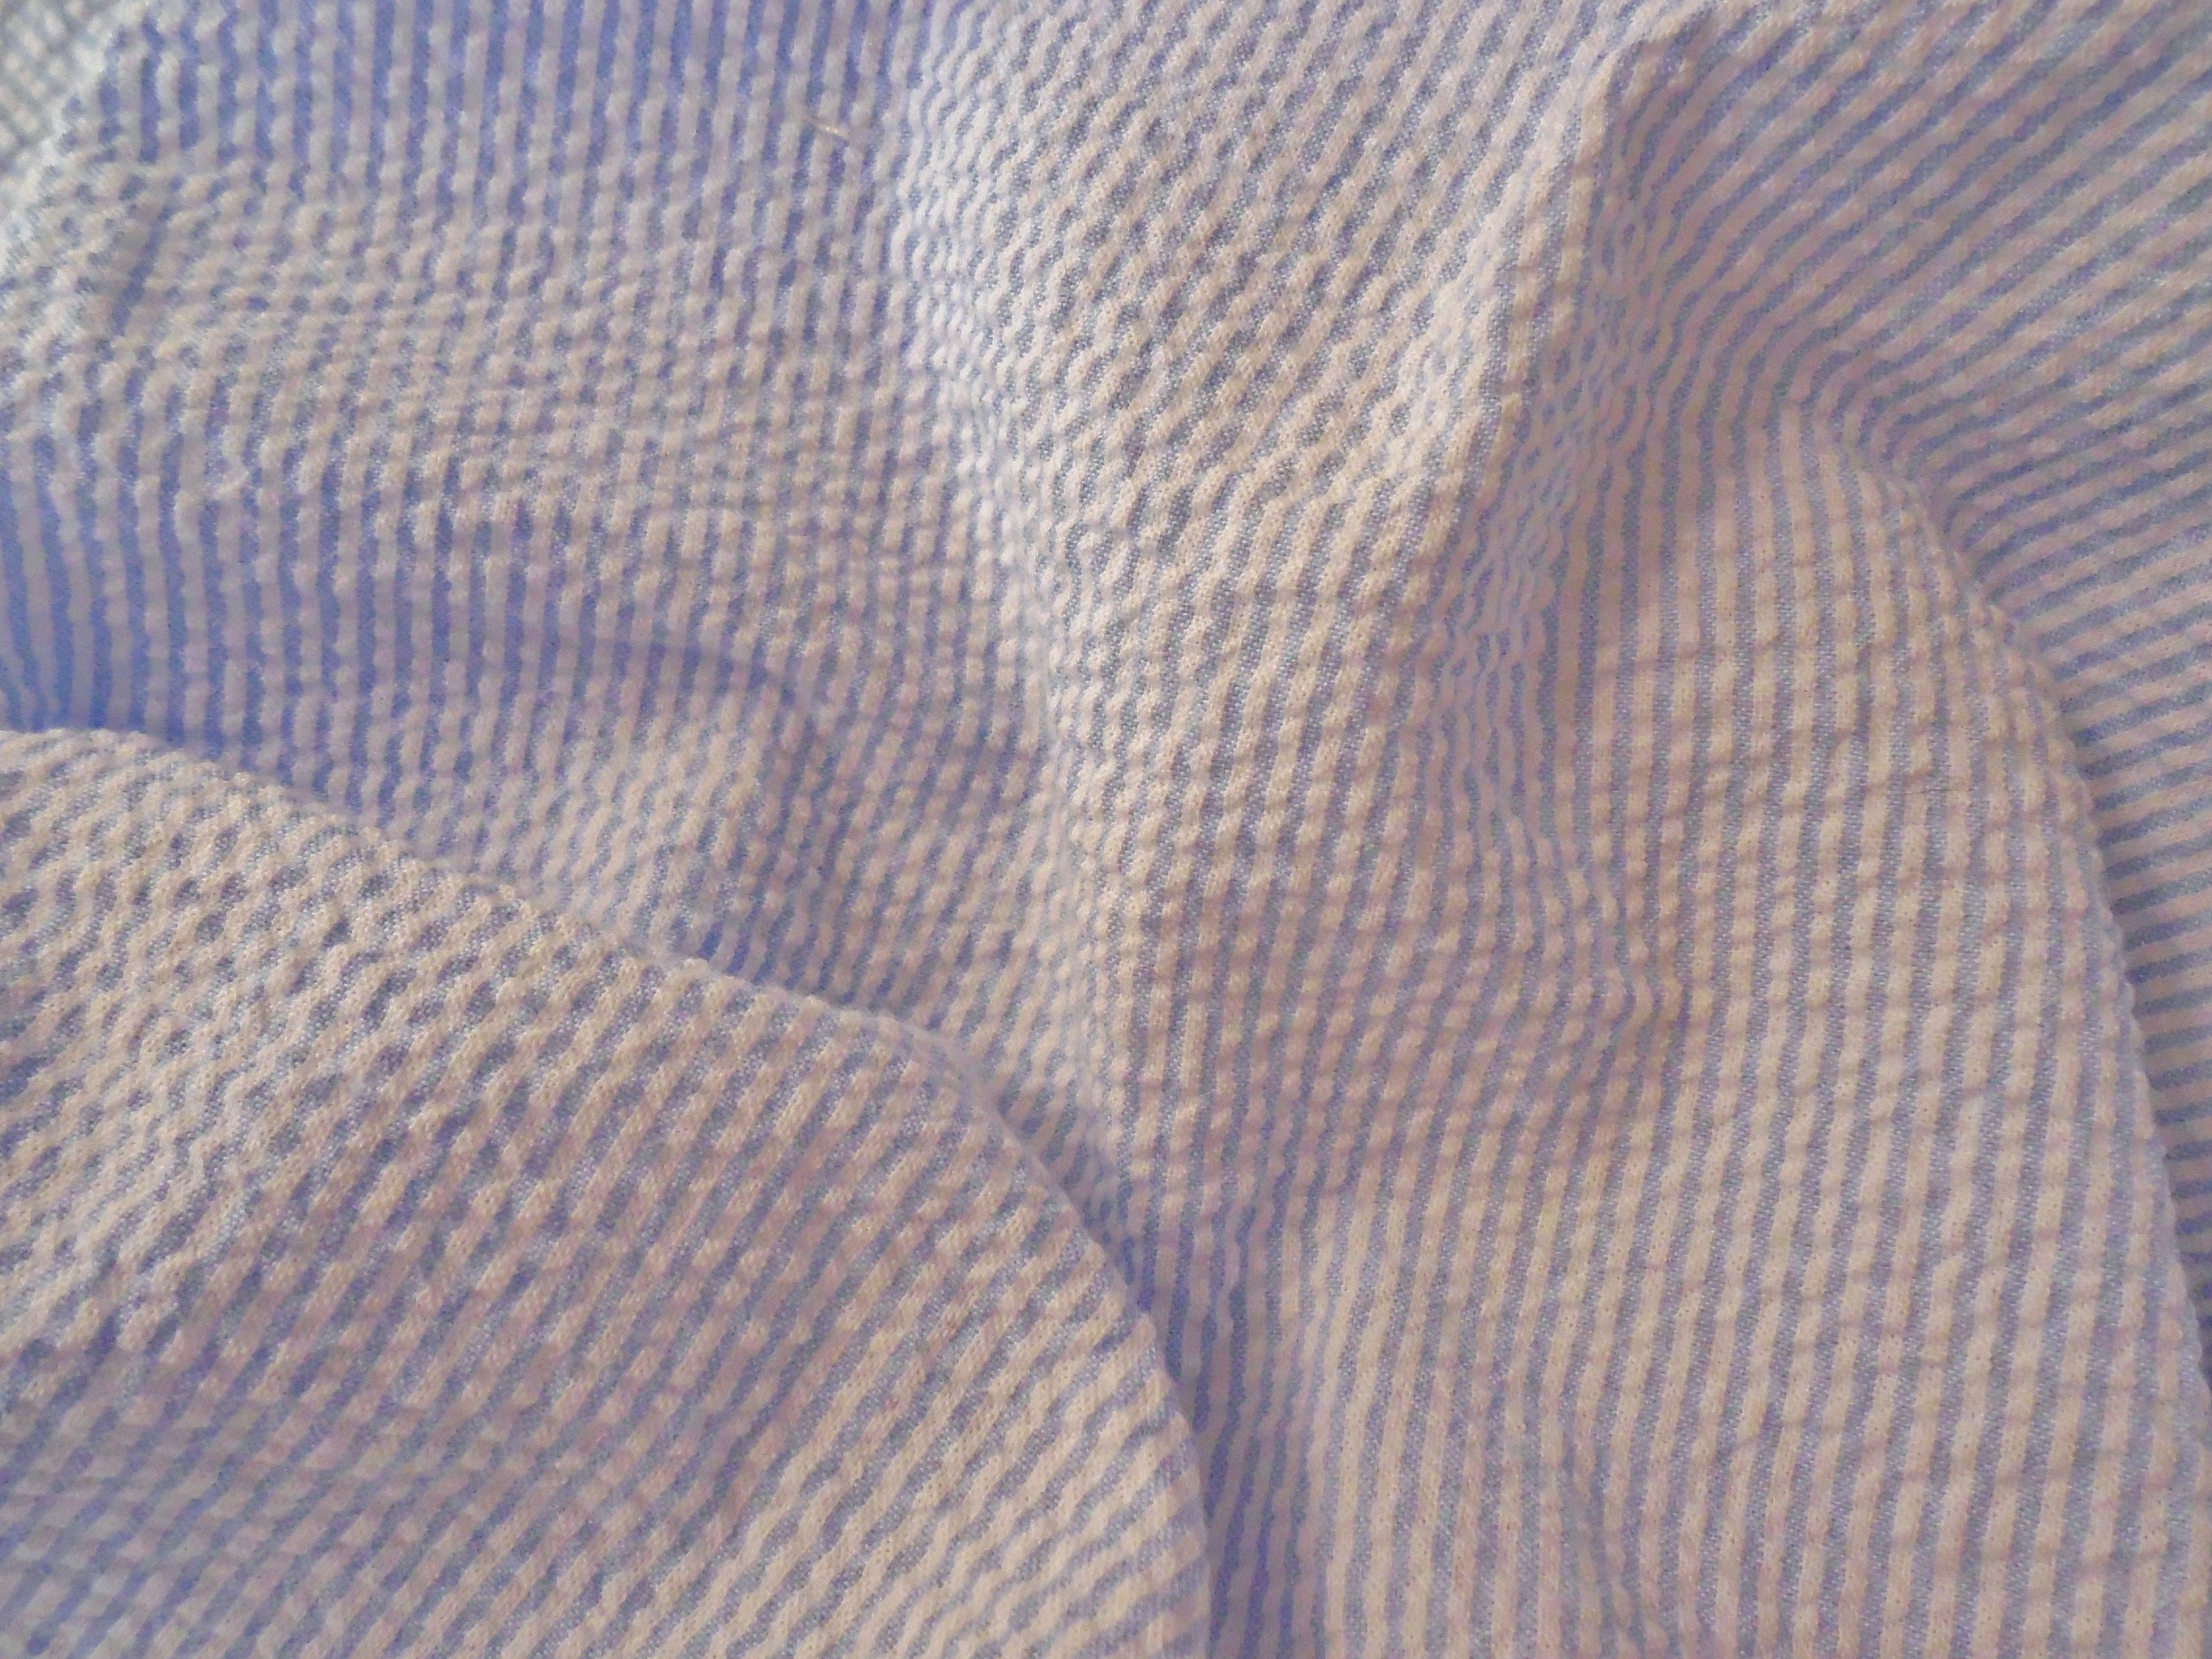 fabric - DSCN3130 - Copy.JPG